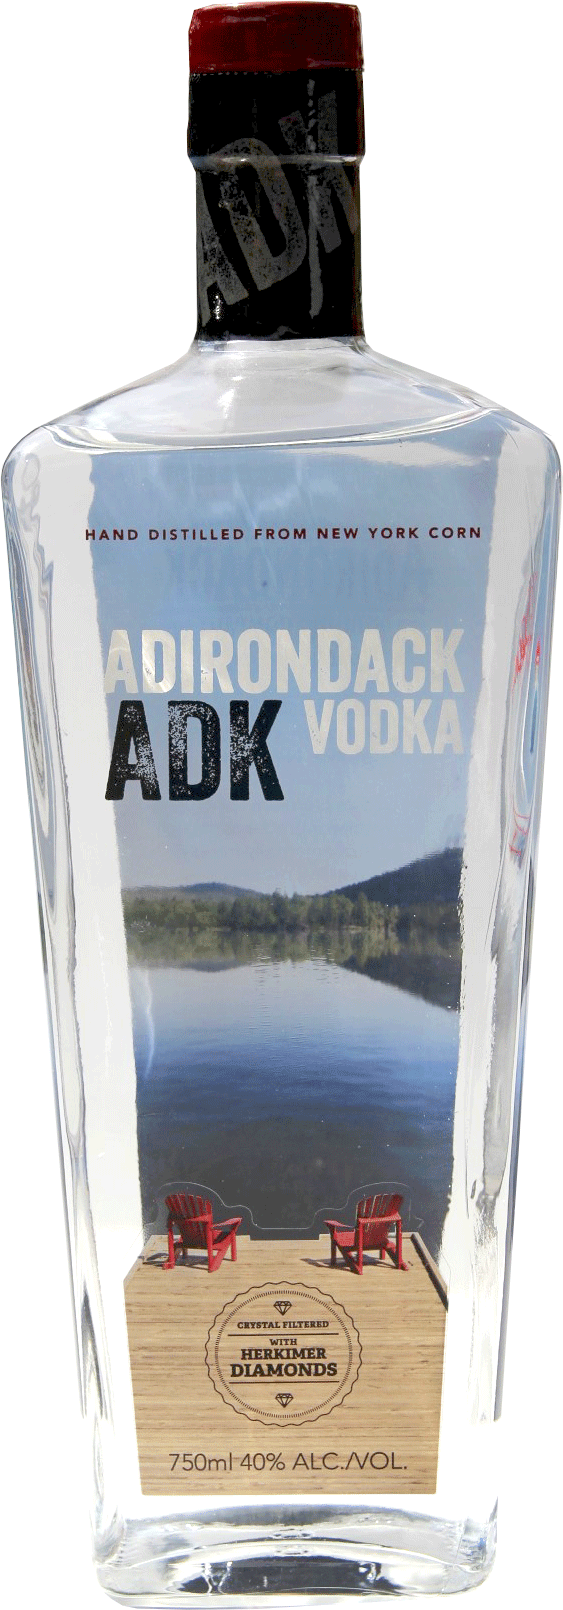  Best Vodka Brand Logo: Adirondack Vodka